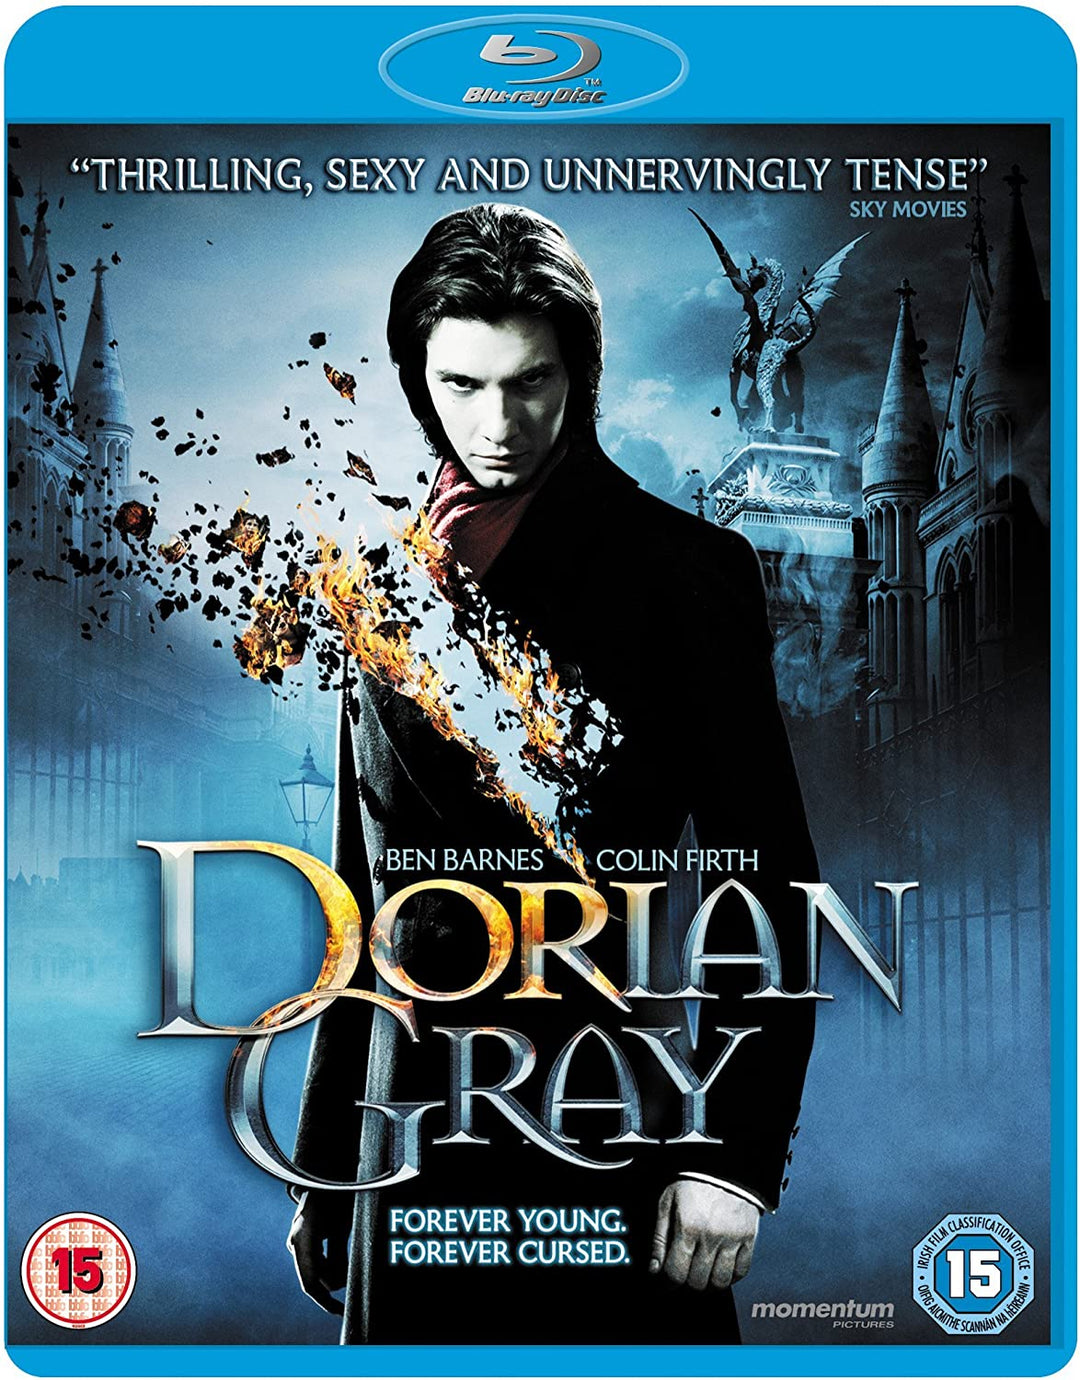 Dorian Gray [Blu-ray]